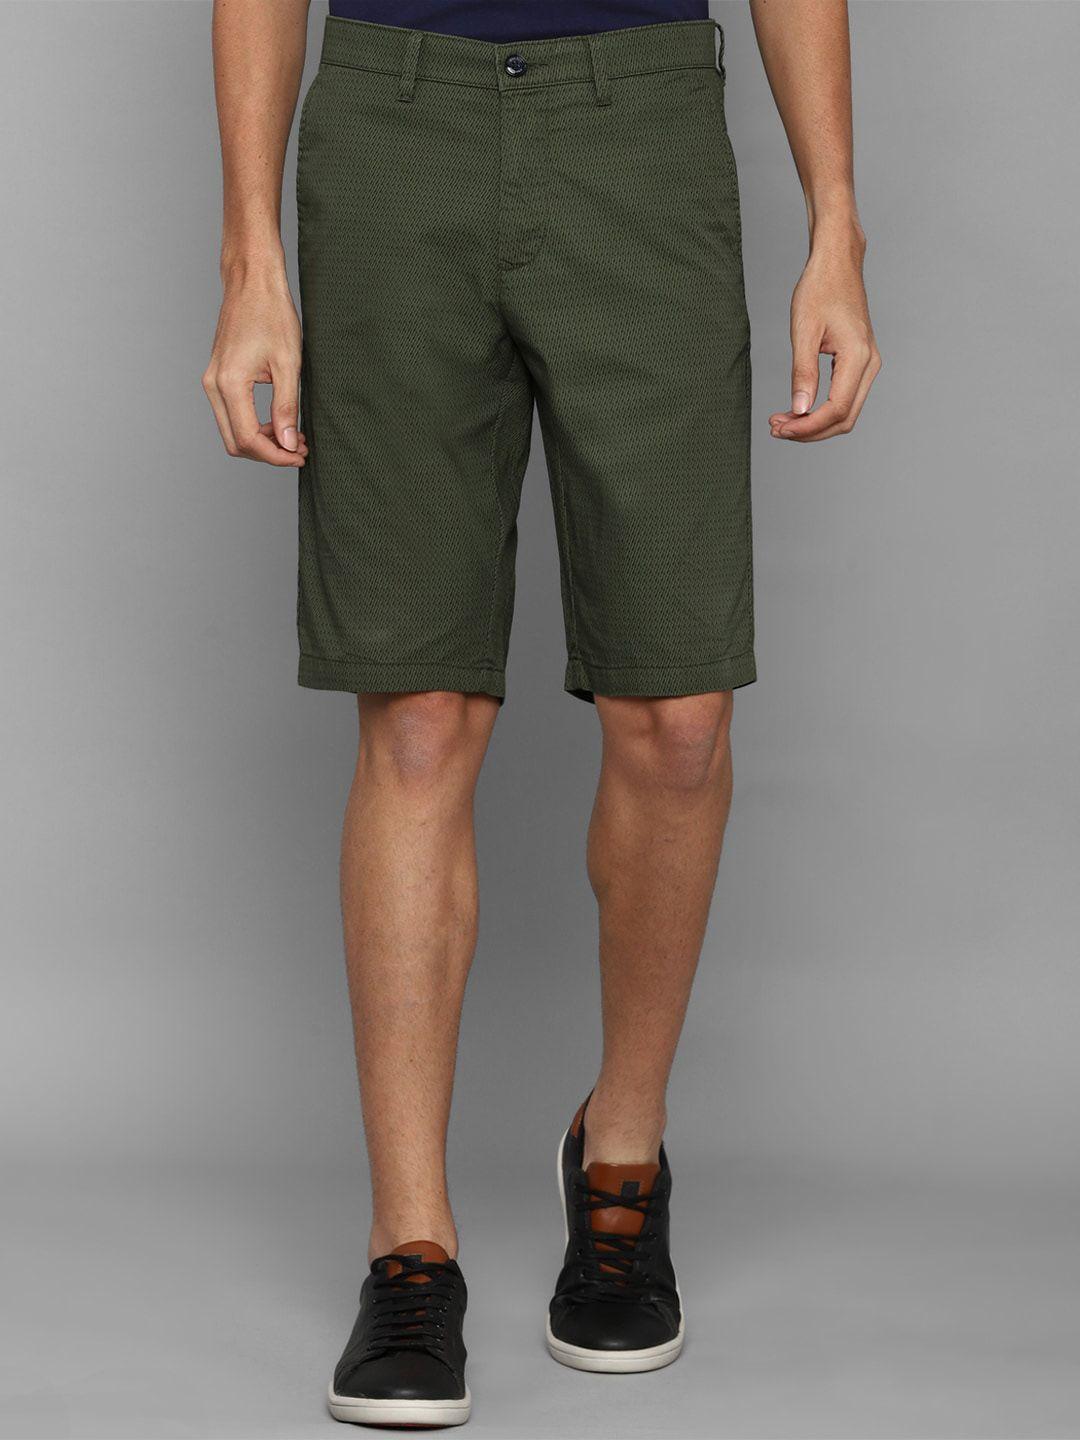 allen solly men olive green slim fit shorts